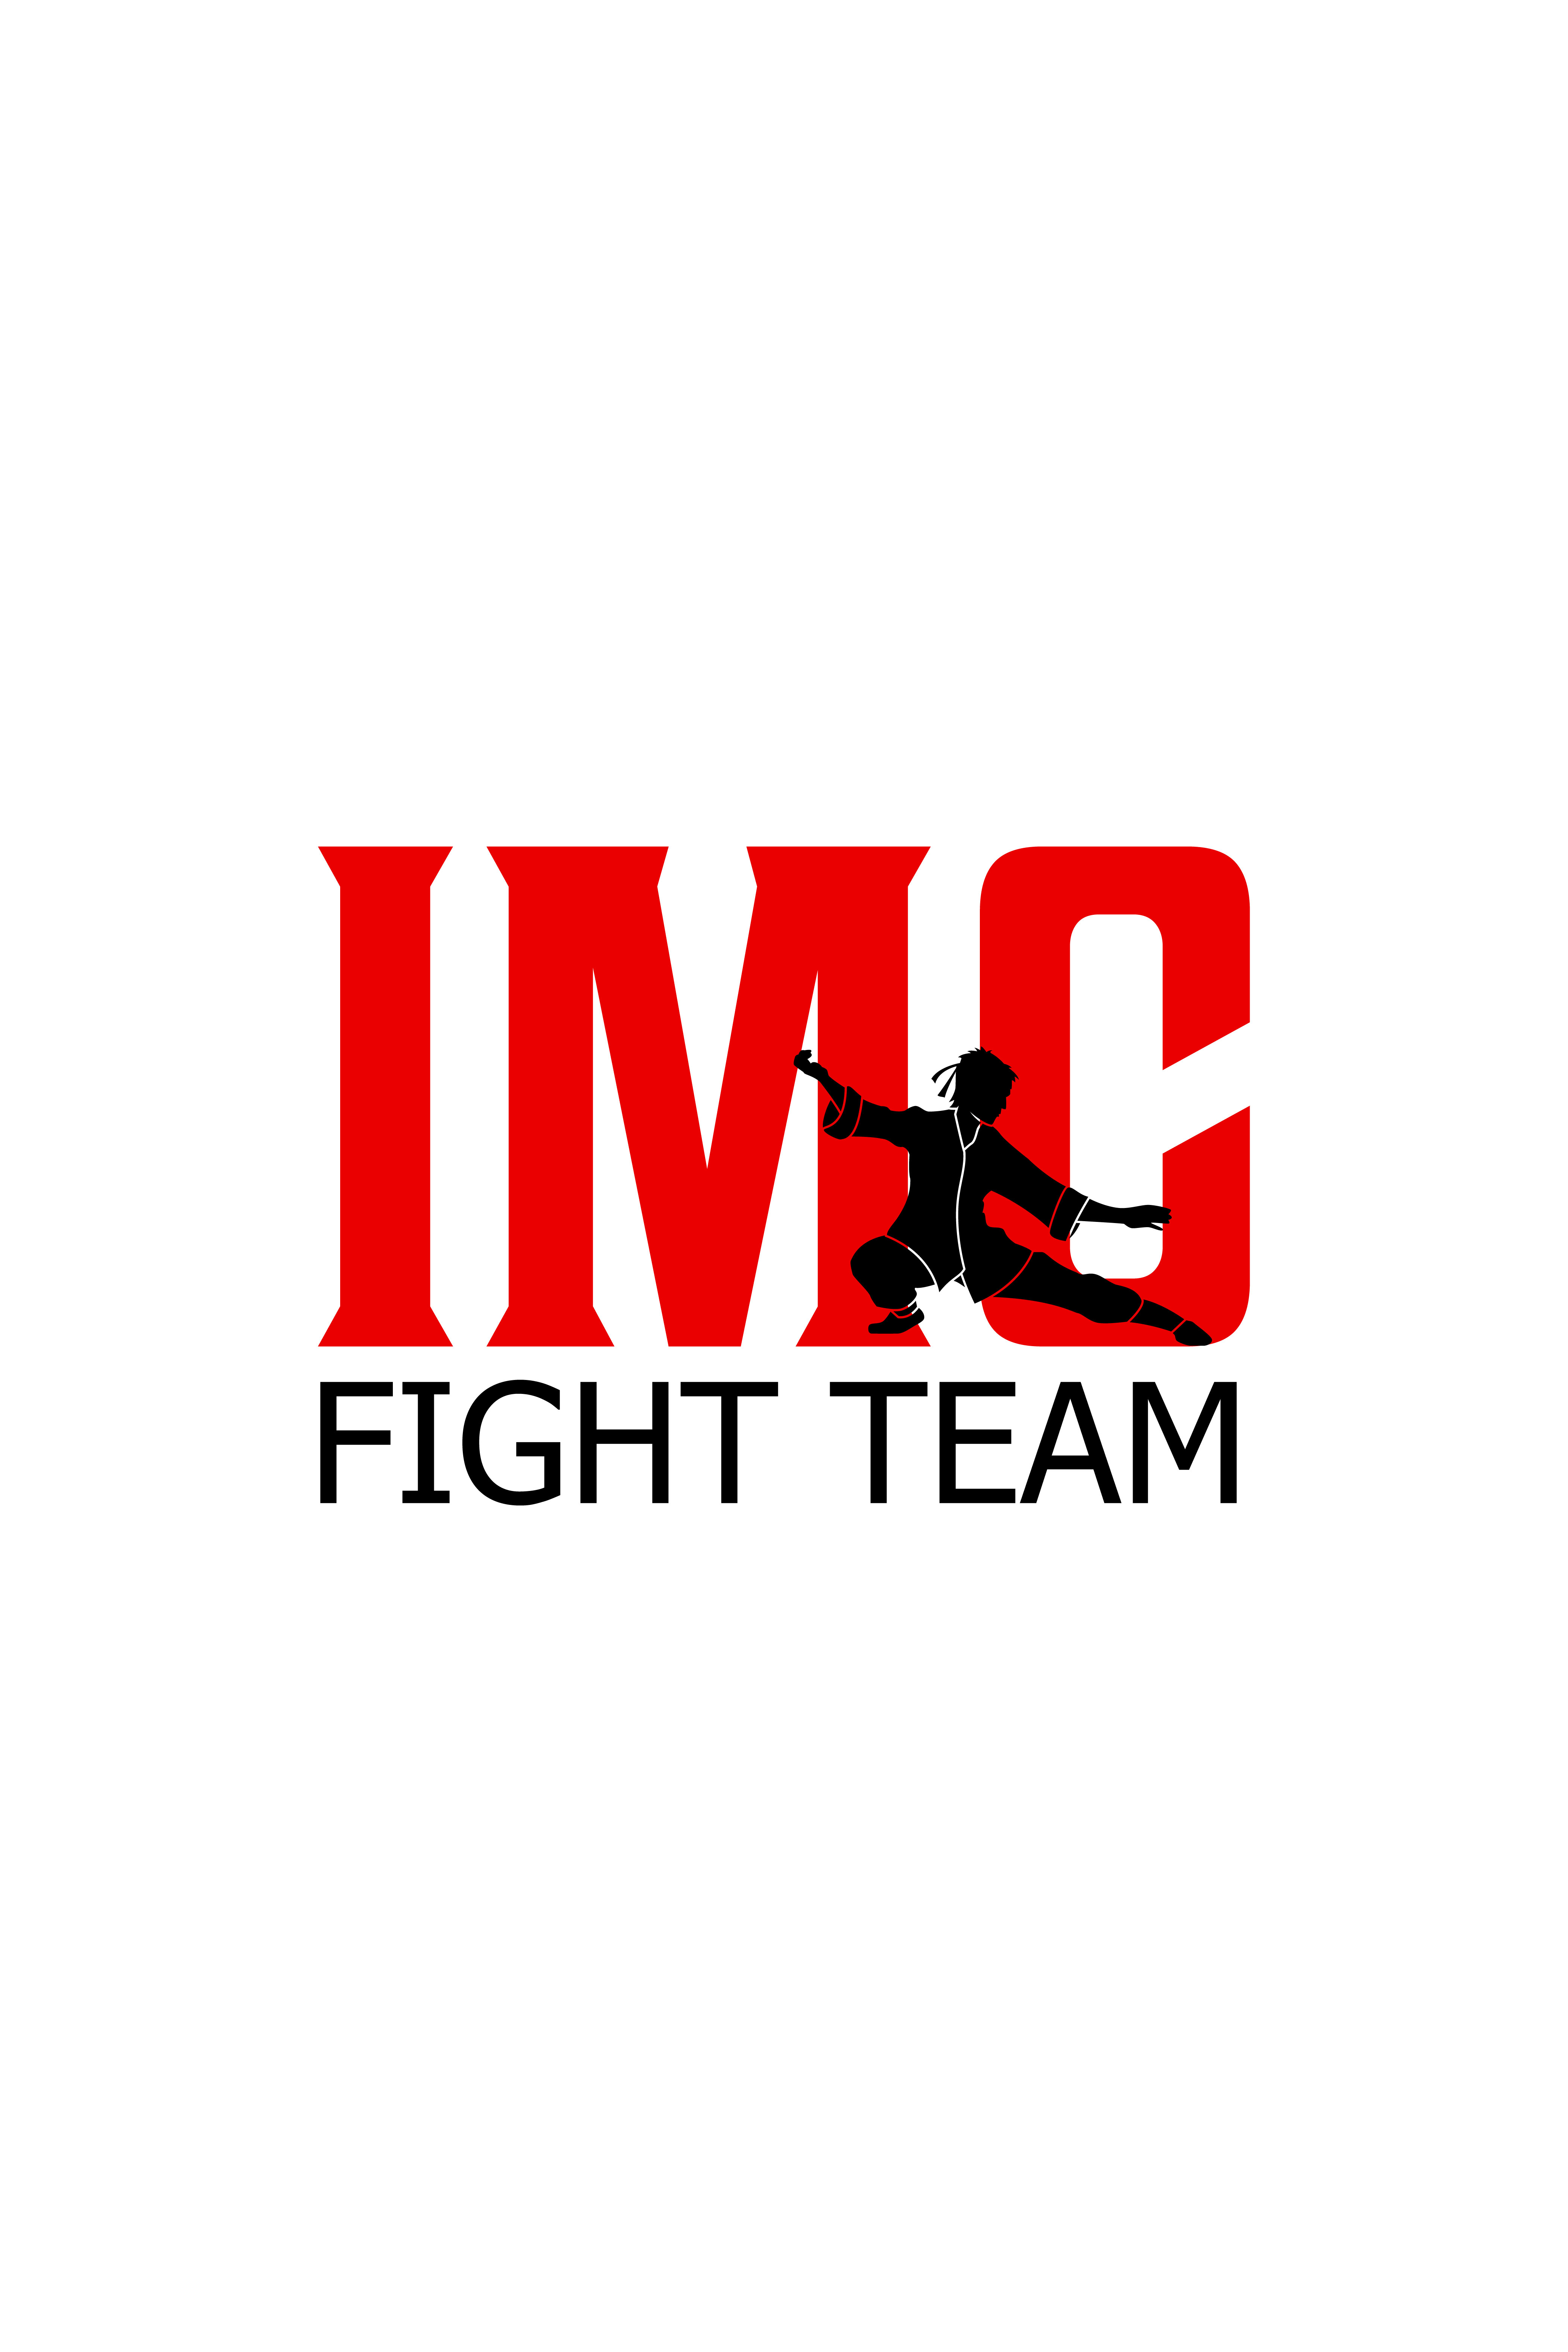 Logo Design Kung Fu Fight Team pinterest preview image.